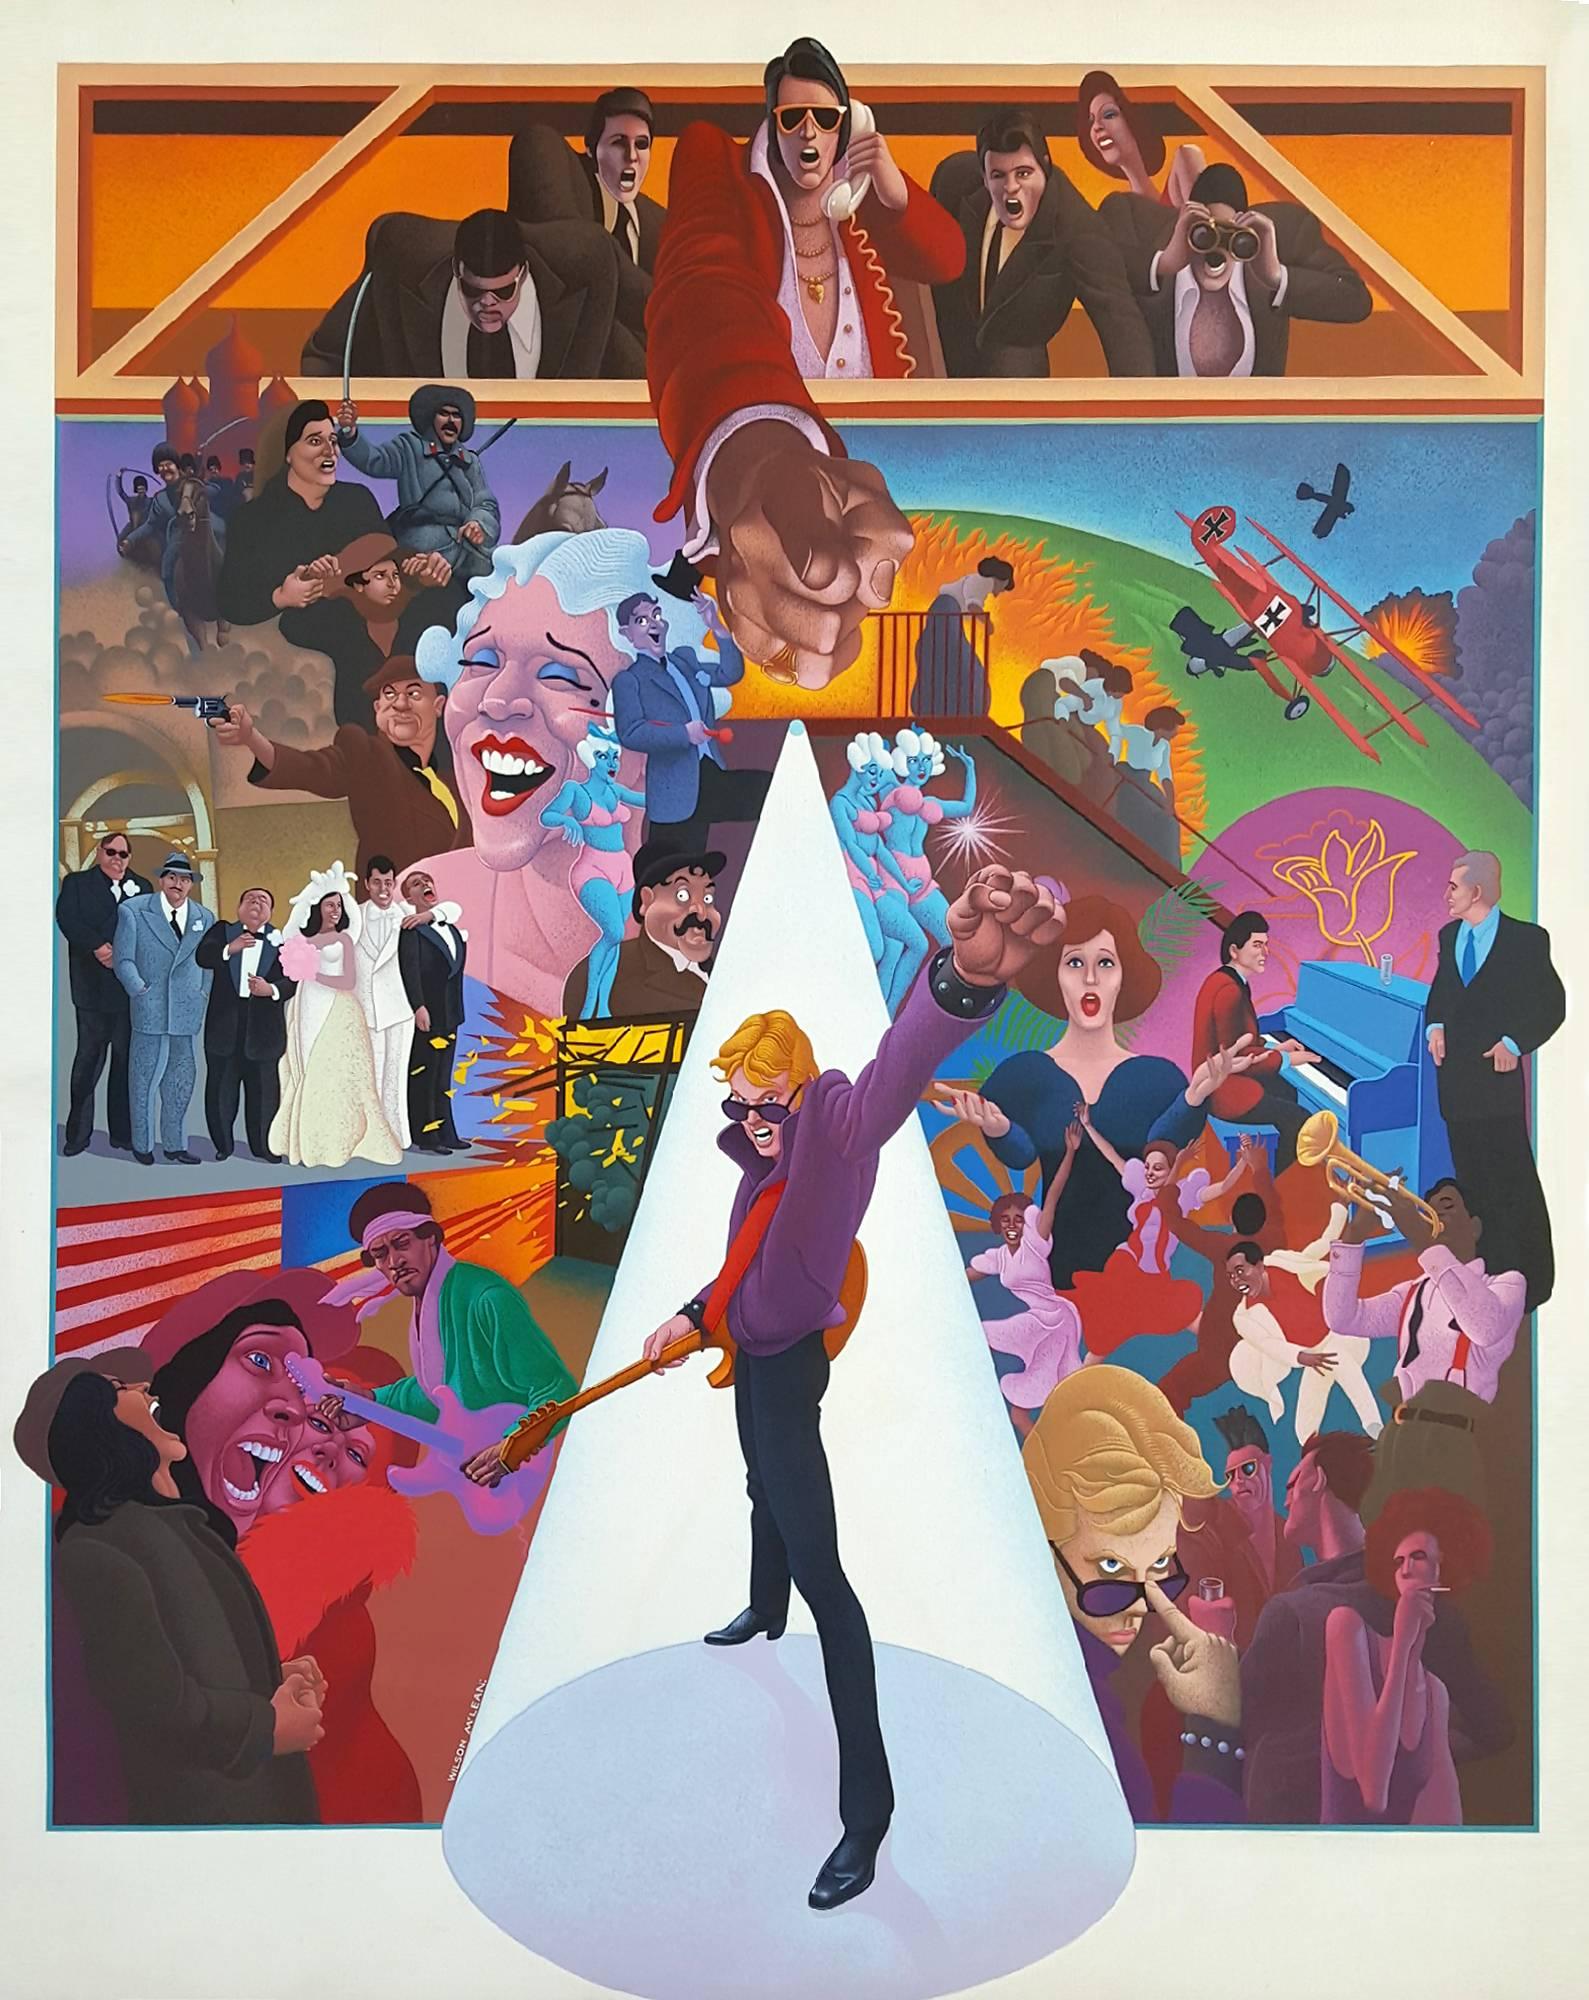 Movie Poster Illustration for "American Pop"